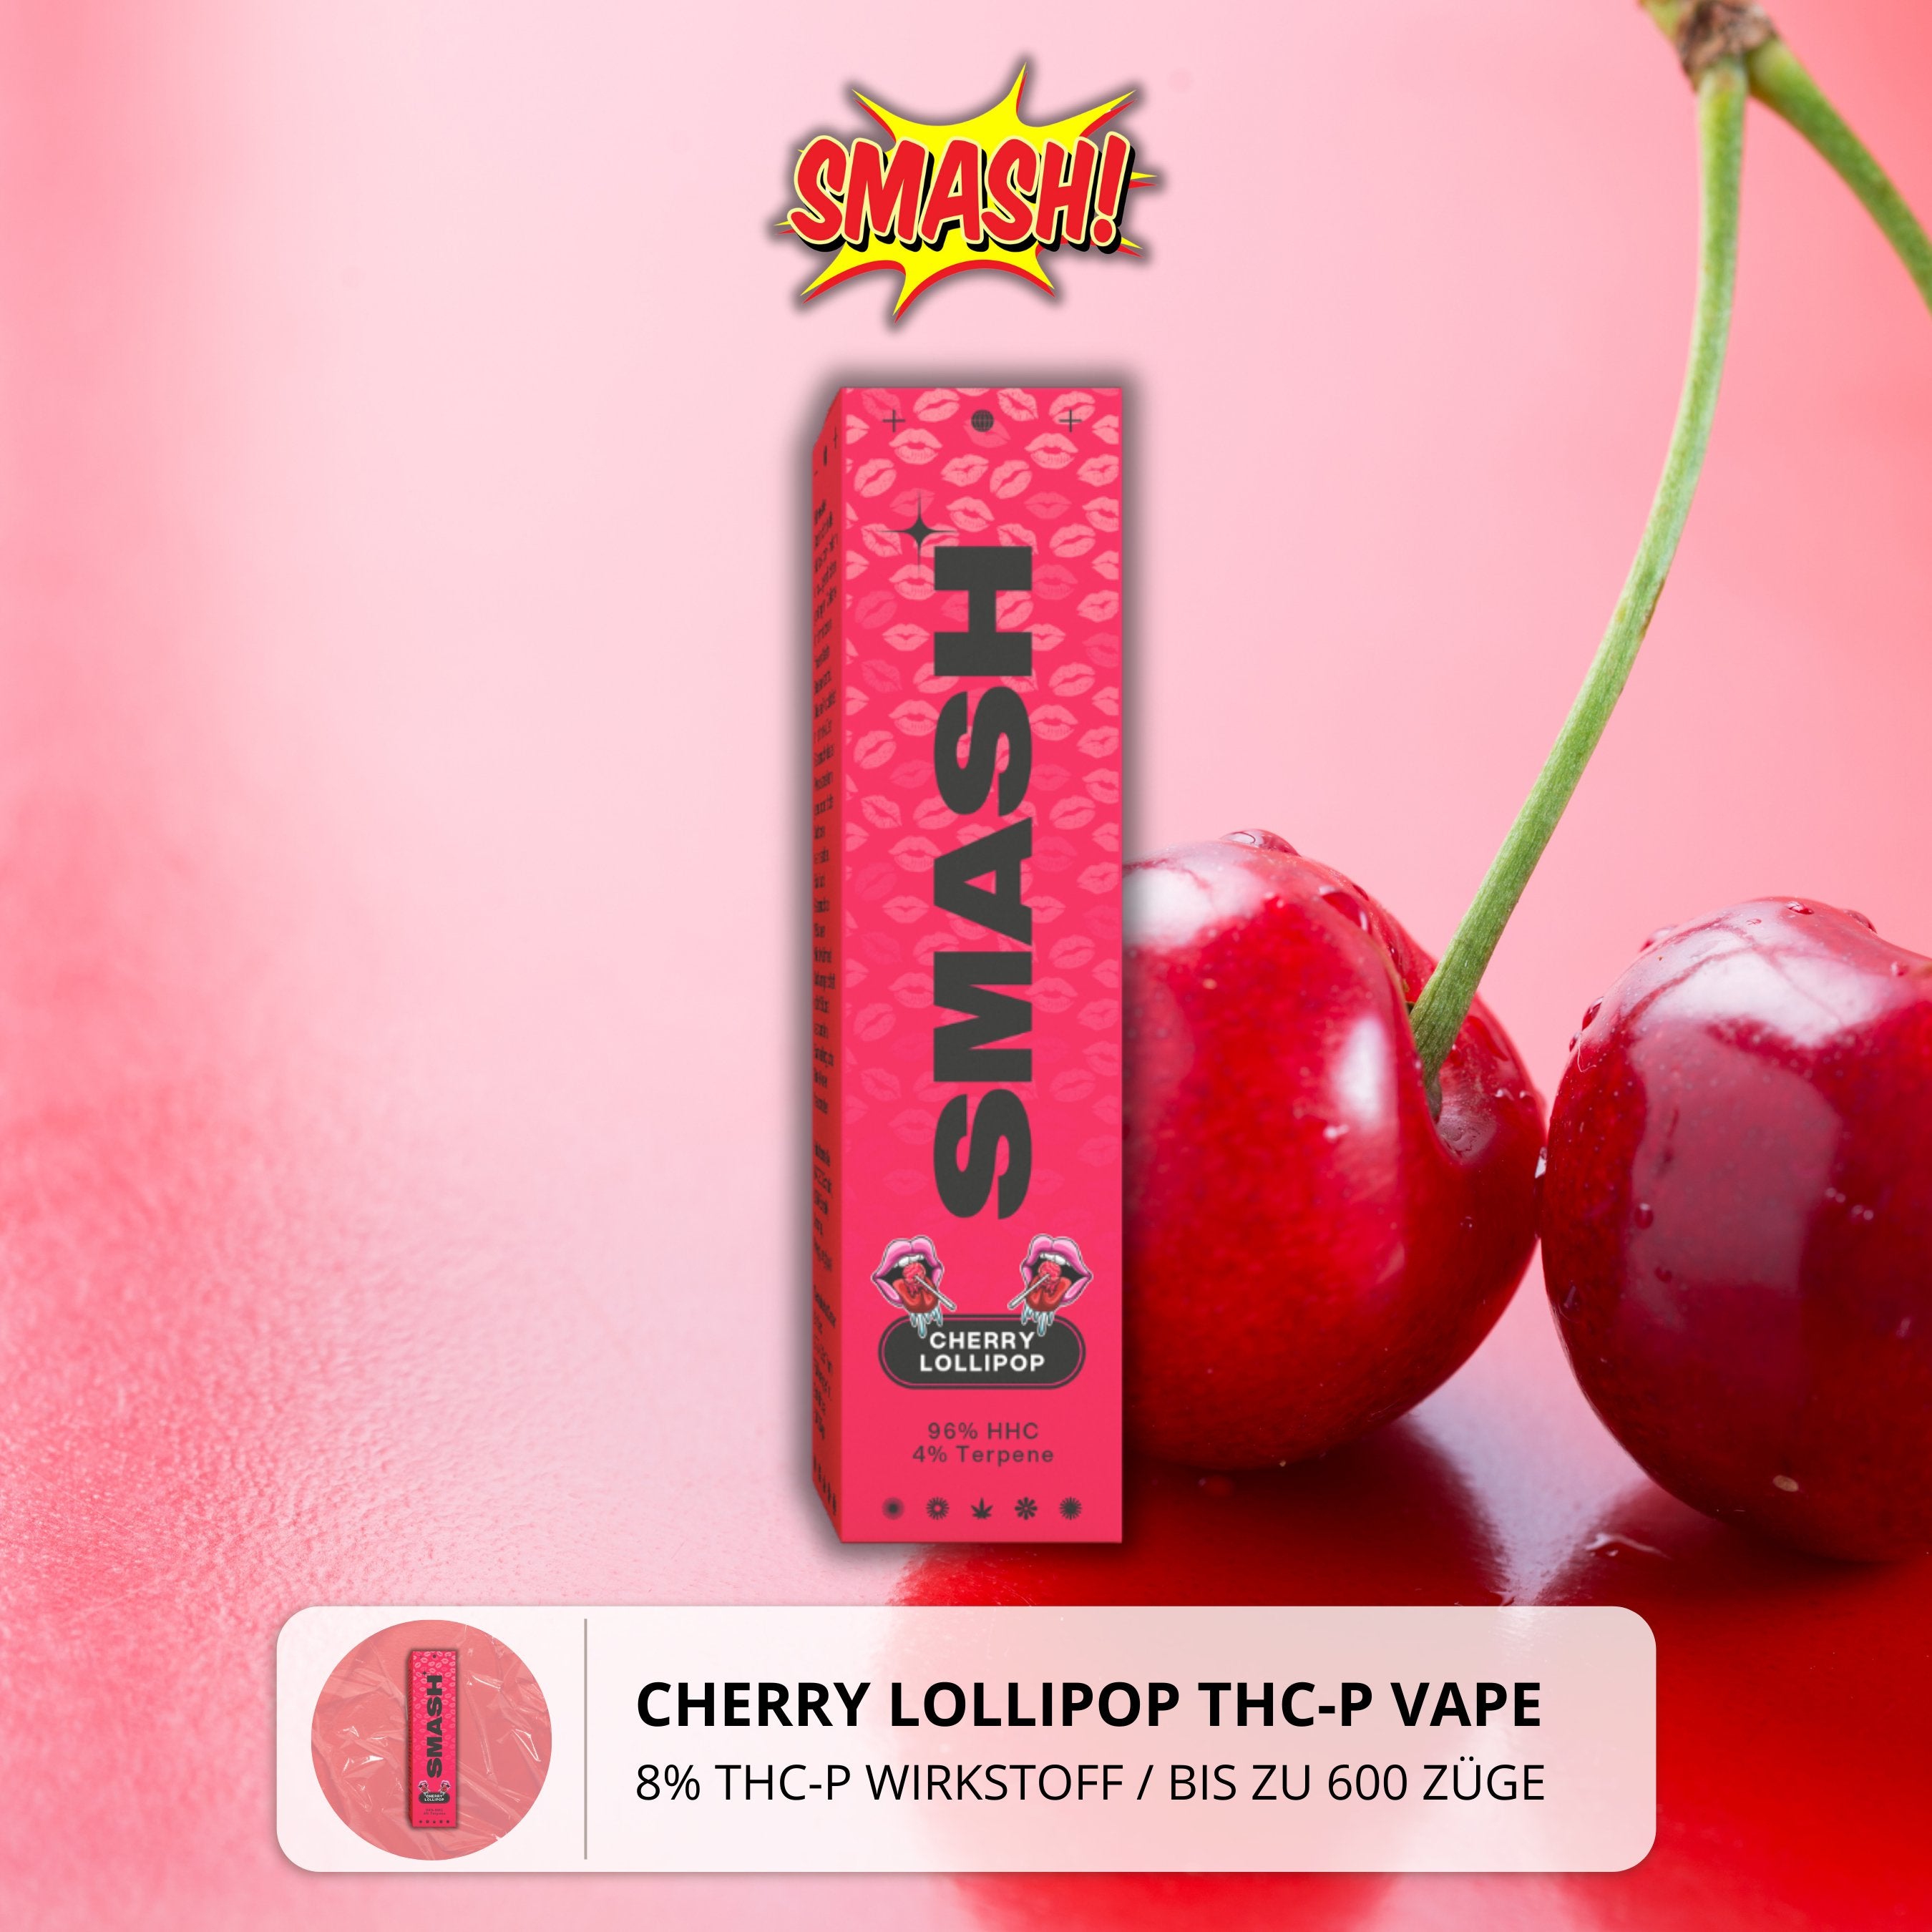 Smash THC-P Vape - Cherry Lollipop